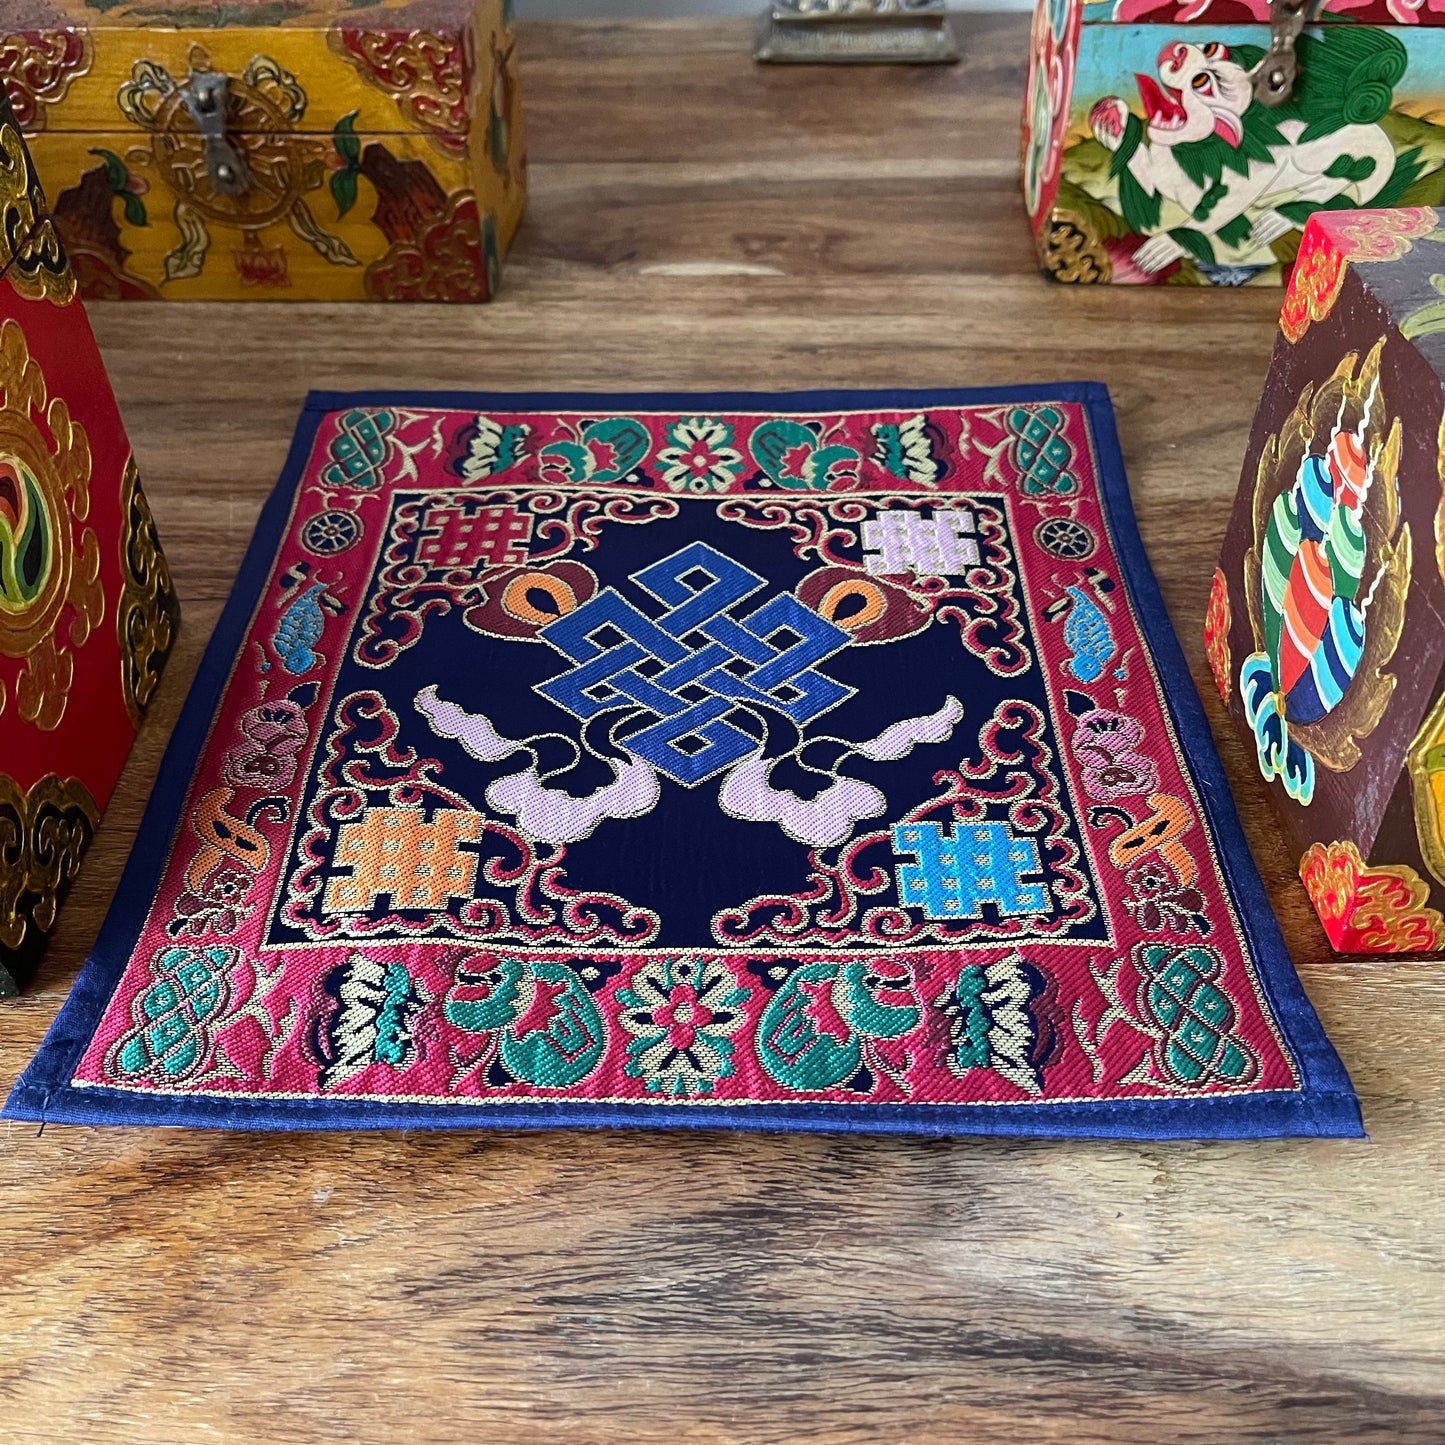 Alter Cloth Tibetan Ritual Mat with knot of infinity 25 x 25 cm